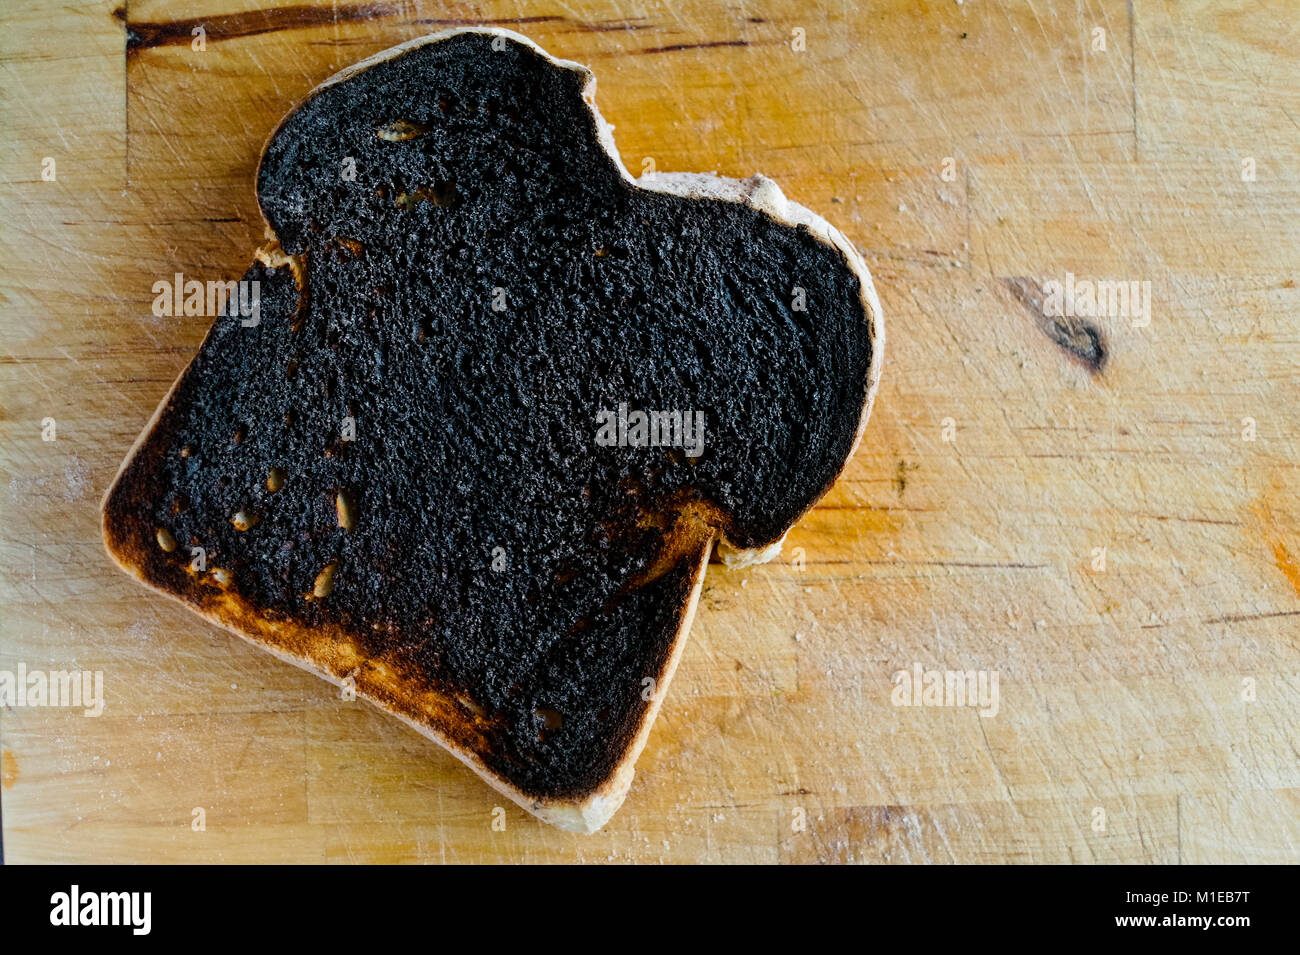 Epic fail burnt toast Stock Photo